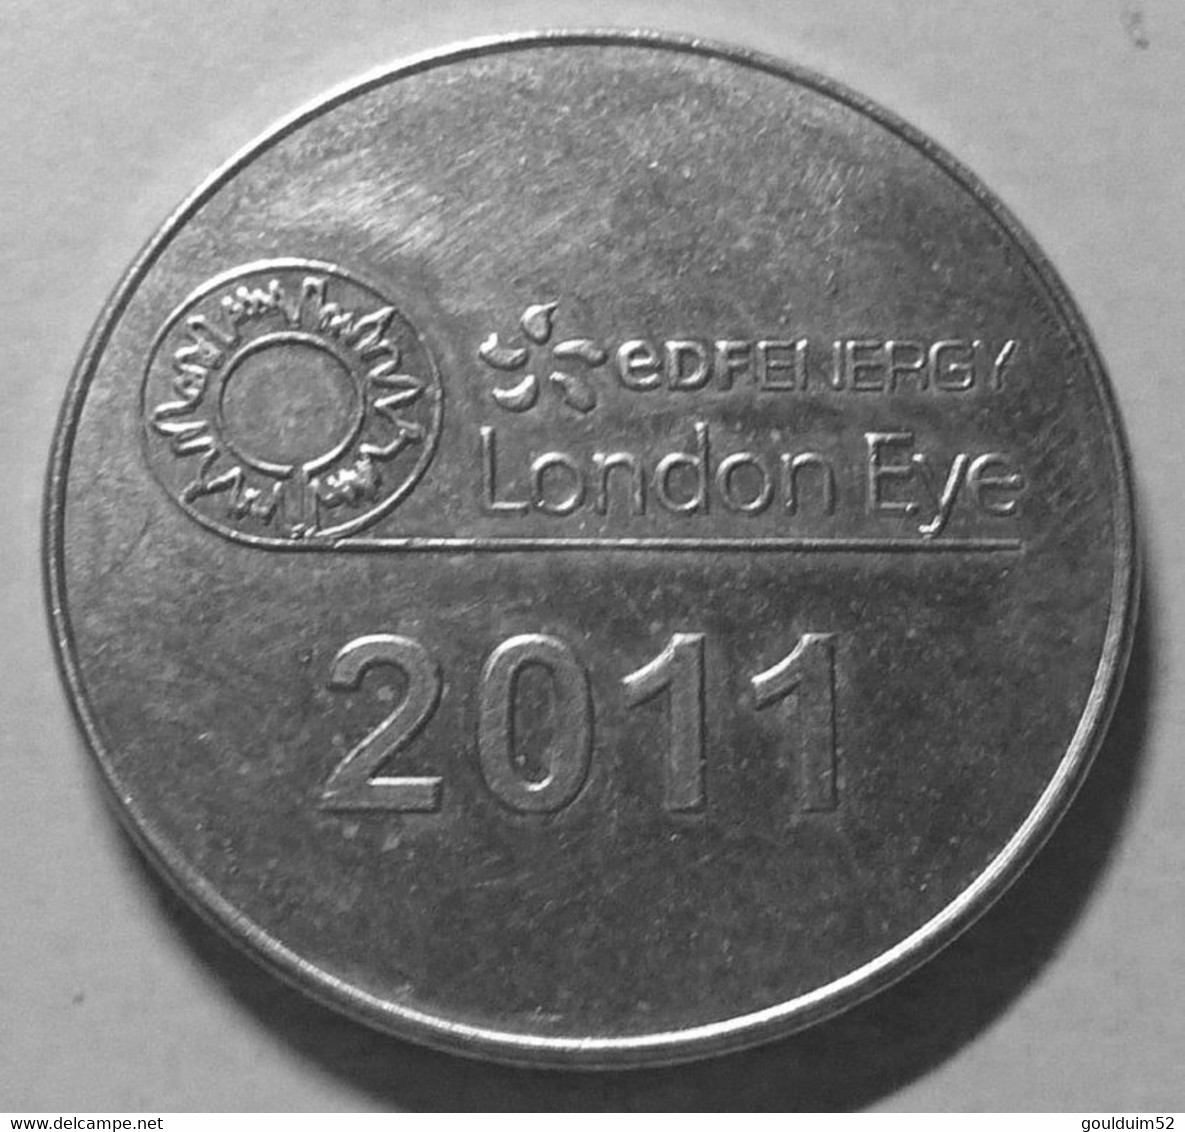 EDF Energy London Eye 2011 - Professionals/Firms